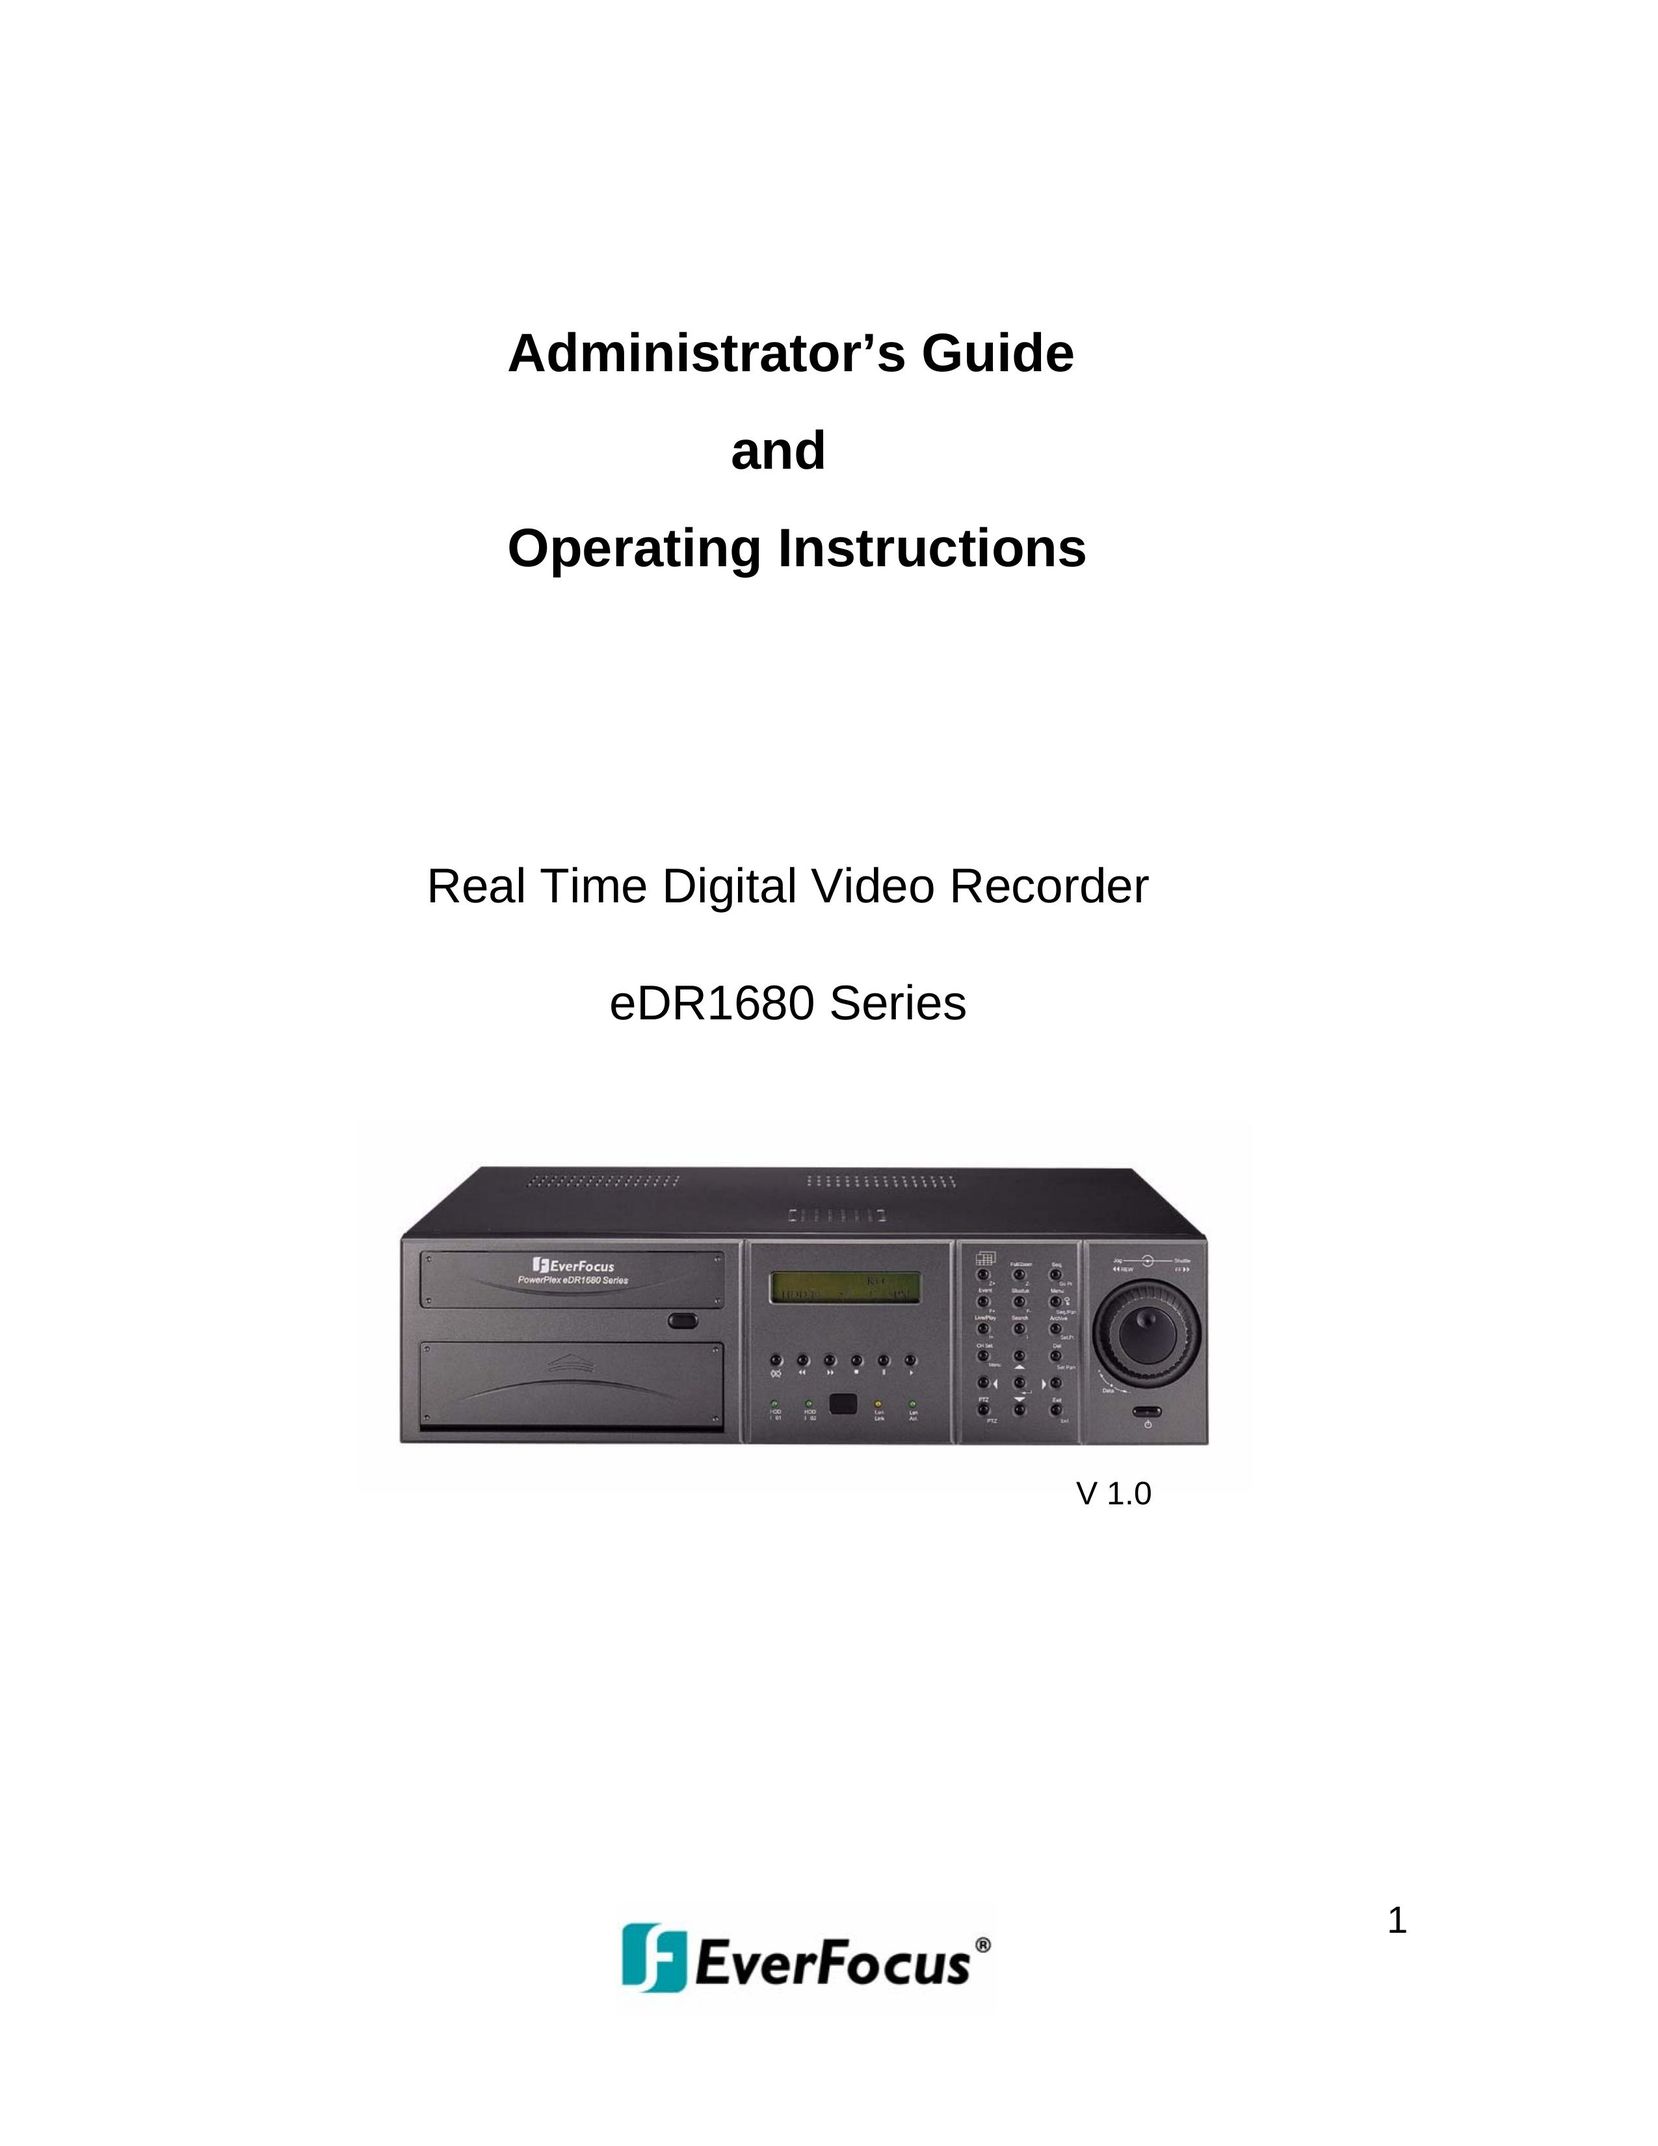 EverFocus eDR1680 Series DVR User Manual